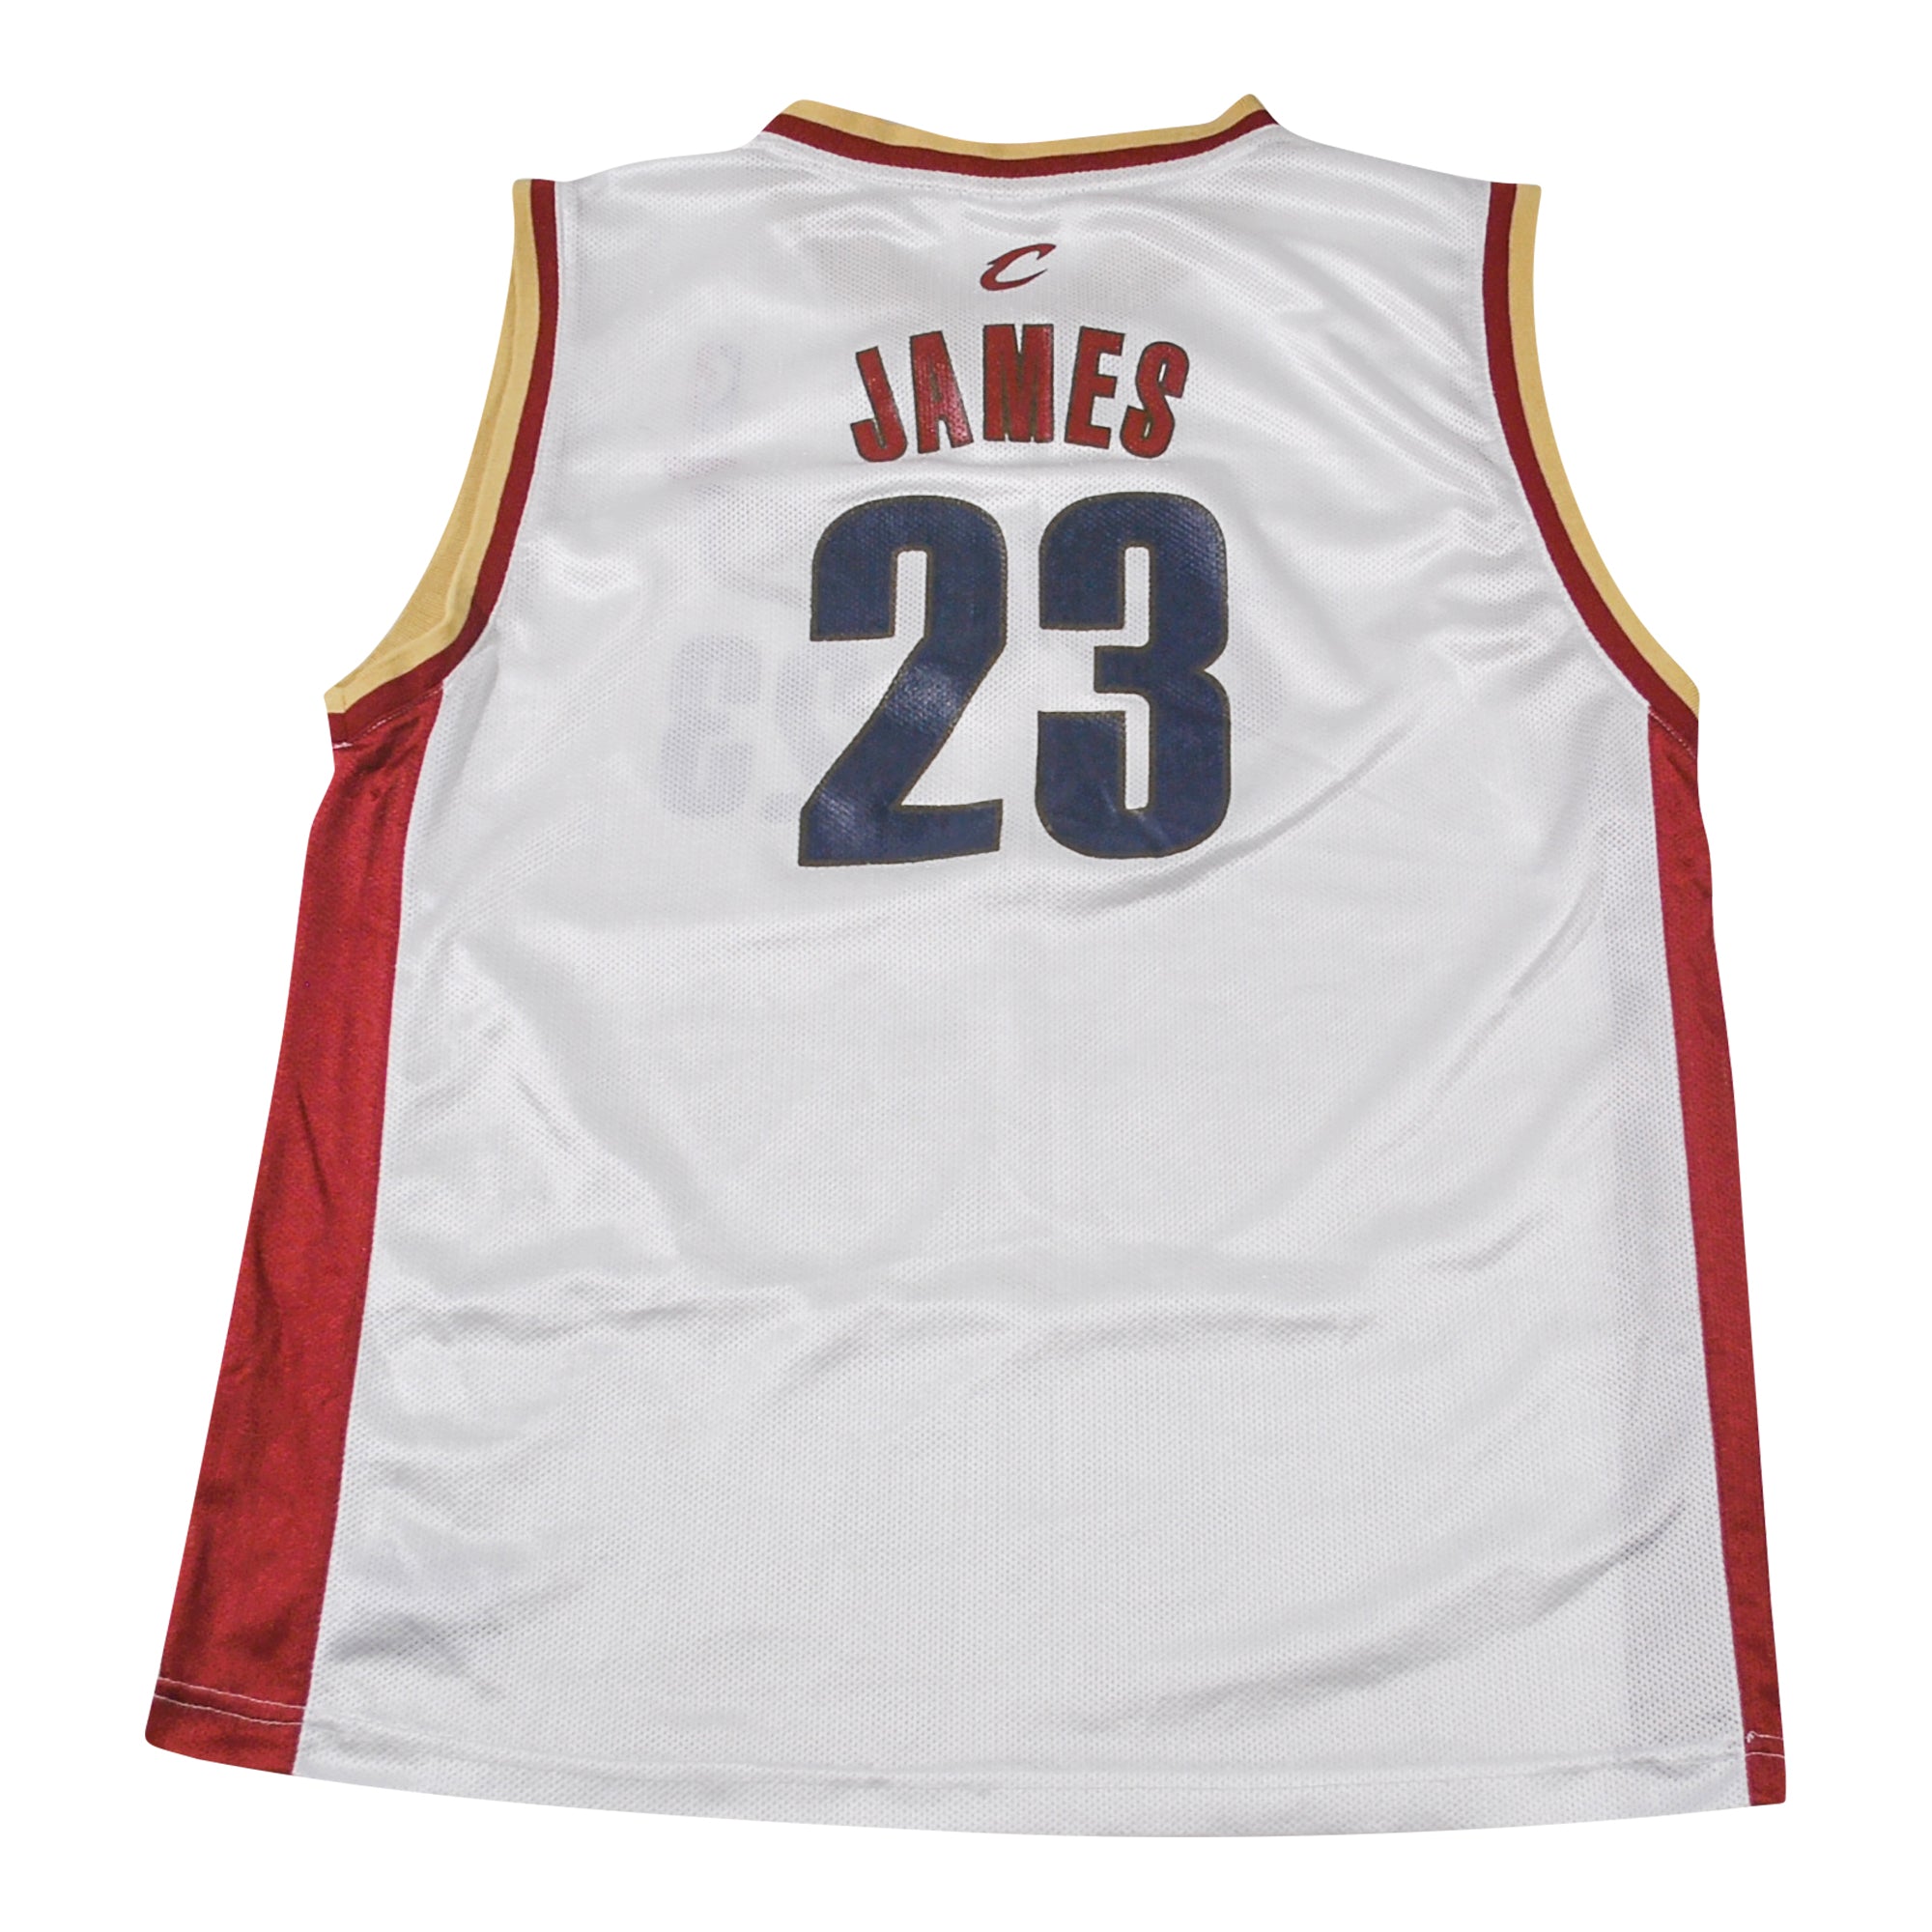 Reebok, Shirts, Reebok Nba Lebron James Cavaliers 23 Basketball Jersey  Mens Size M